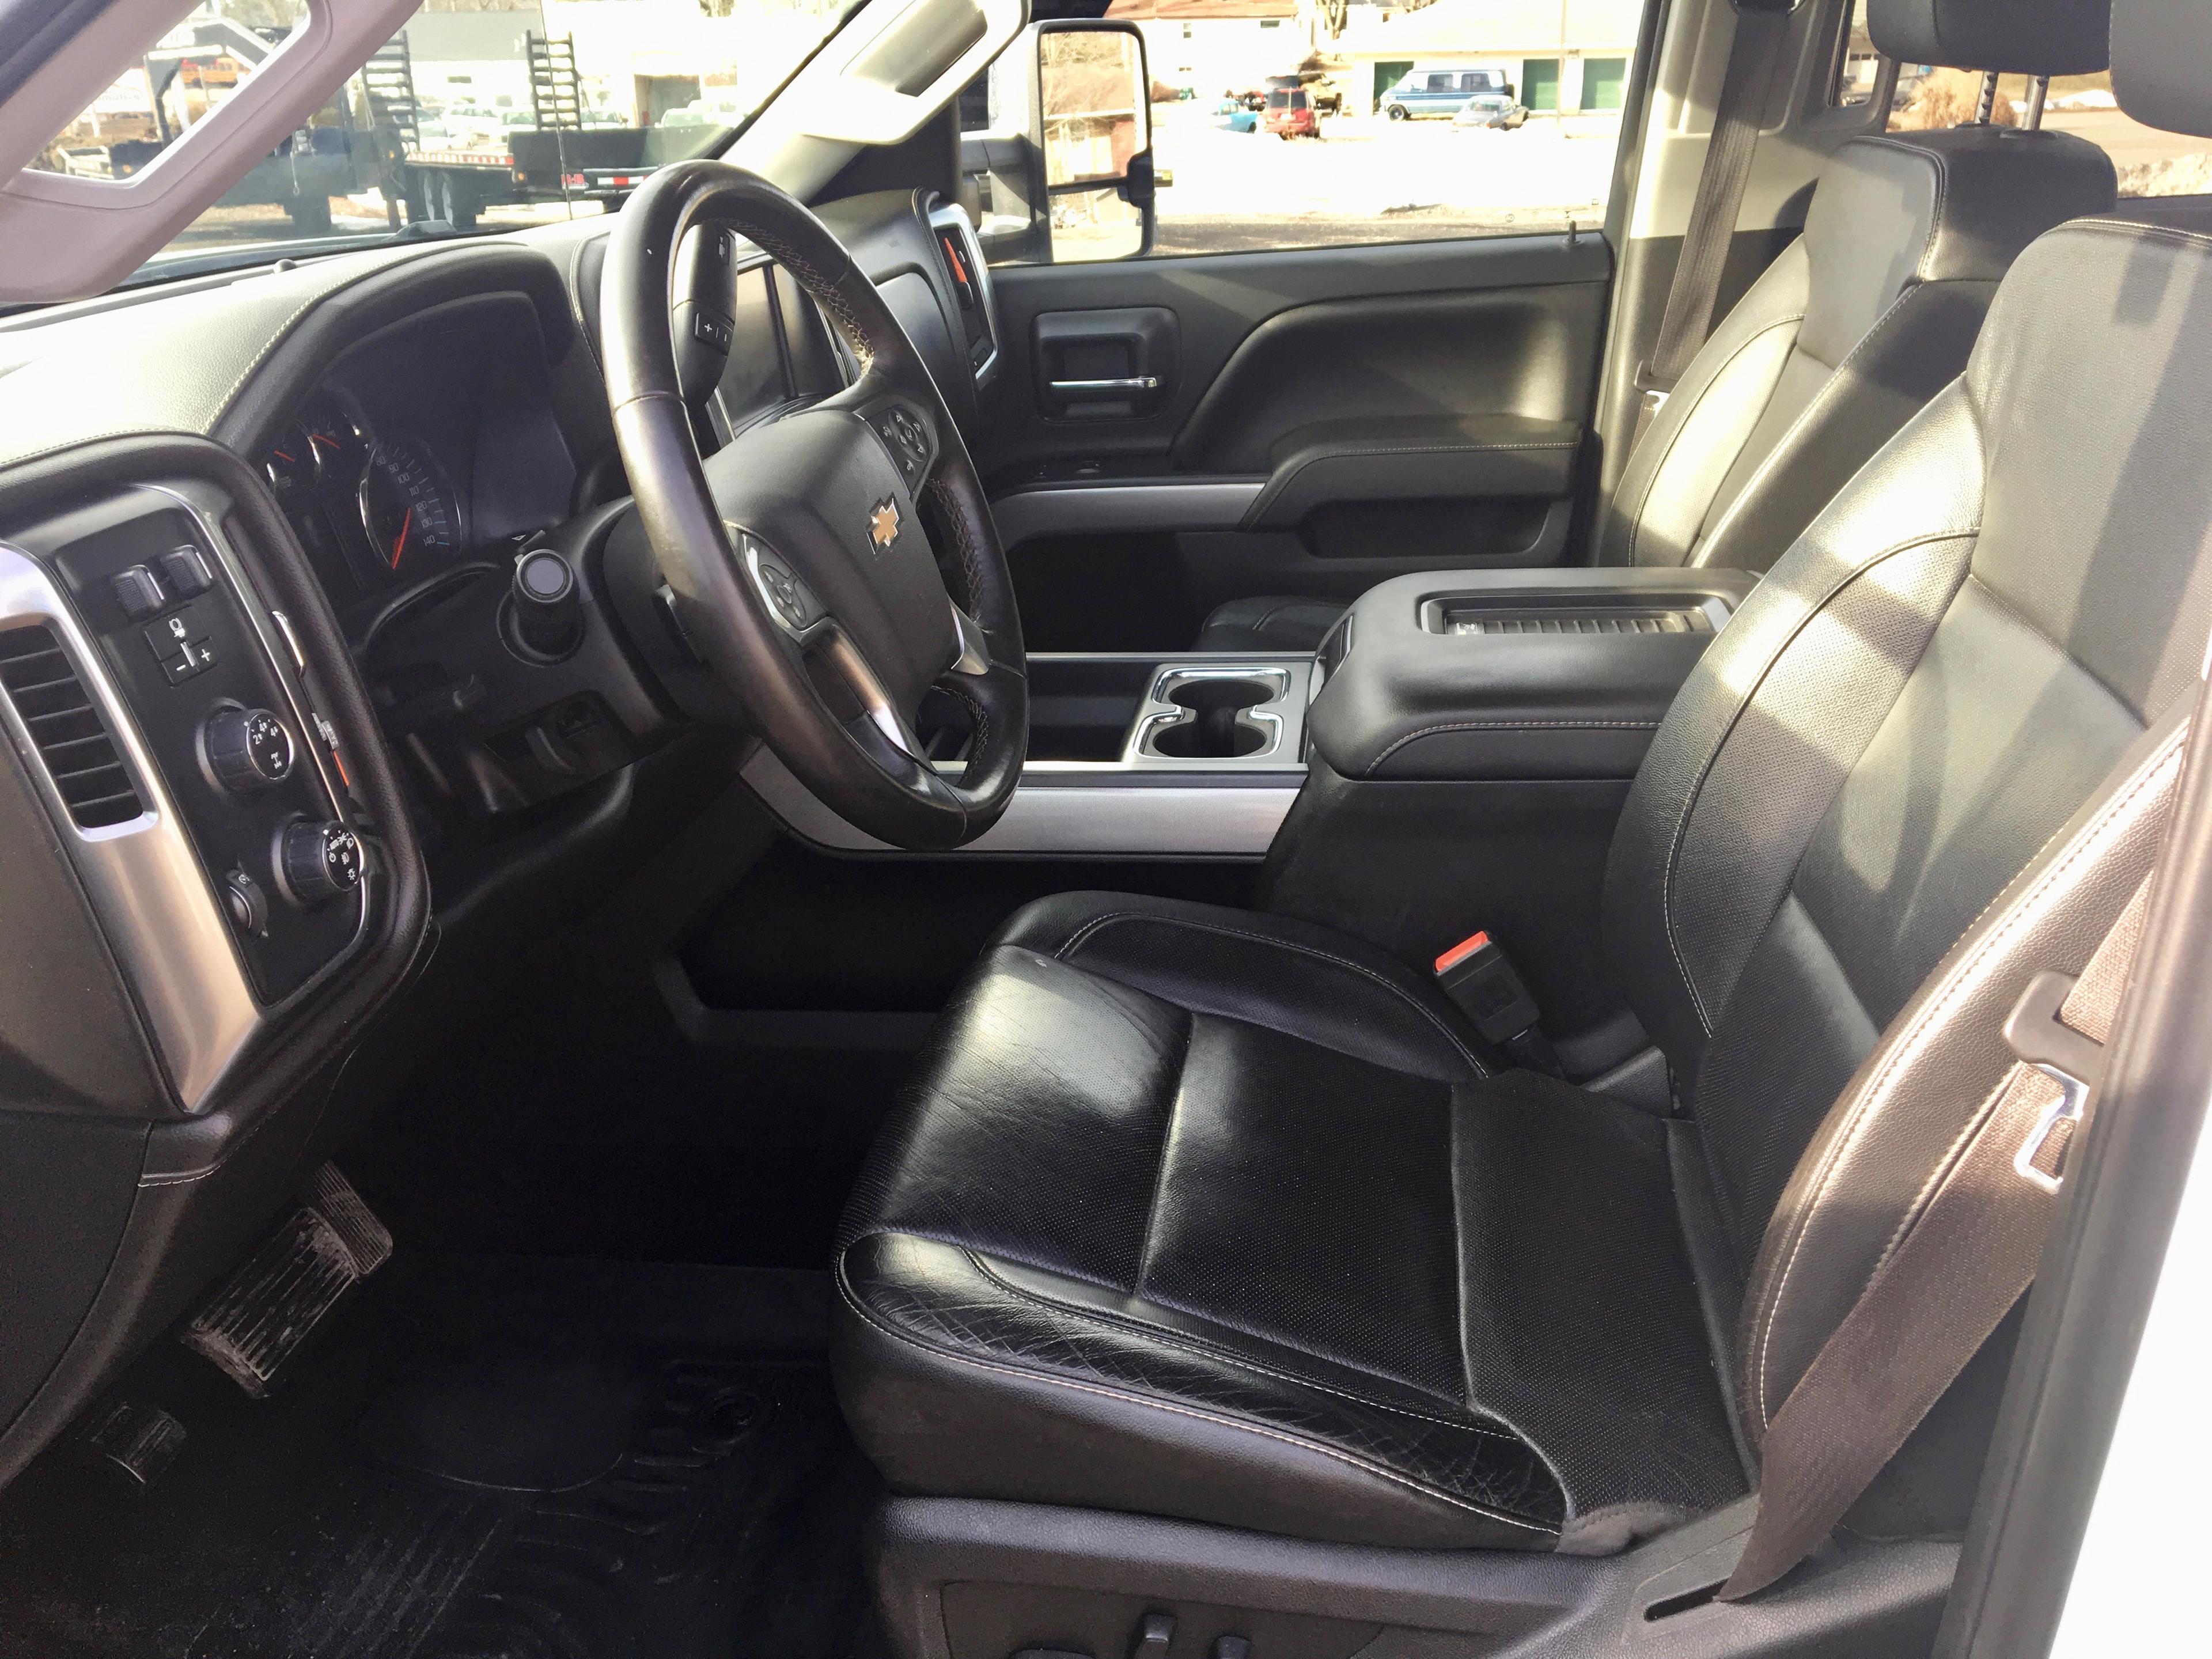 2016 Chevy Silverado 2500 HD LTZ Crew Cab Z71